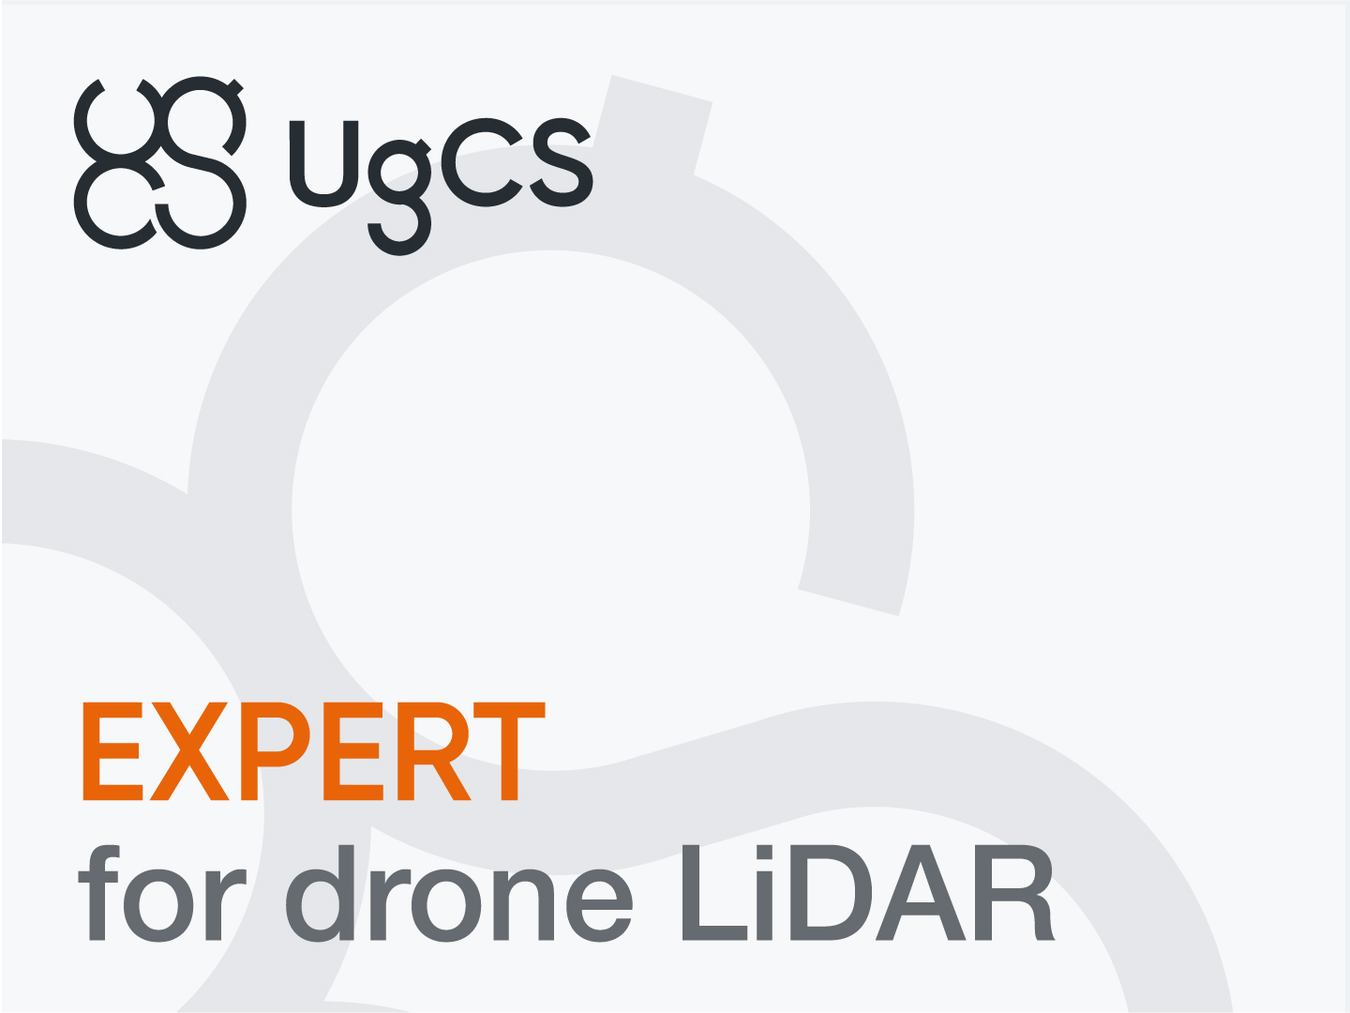 UgCS EXPERT for drone LiDAR